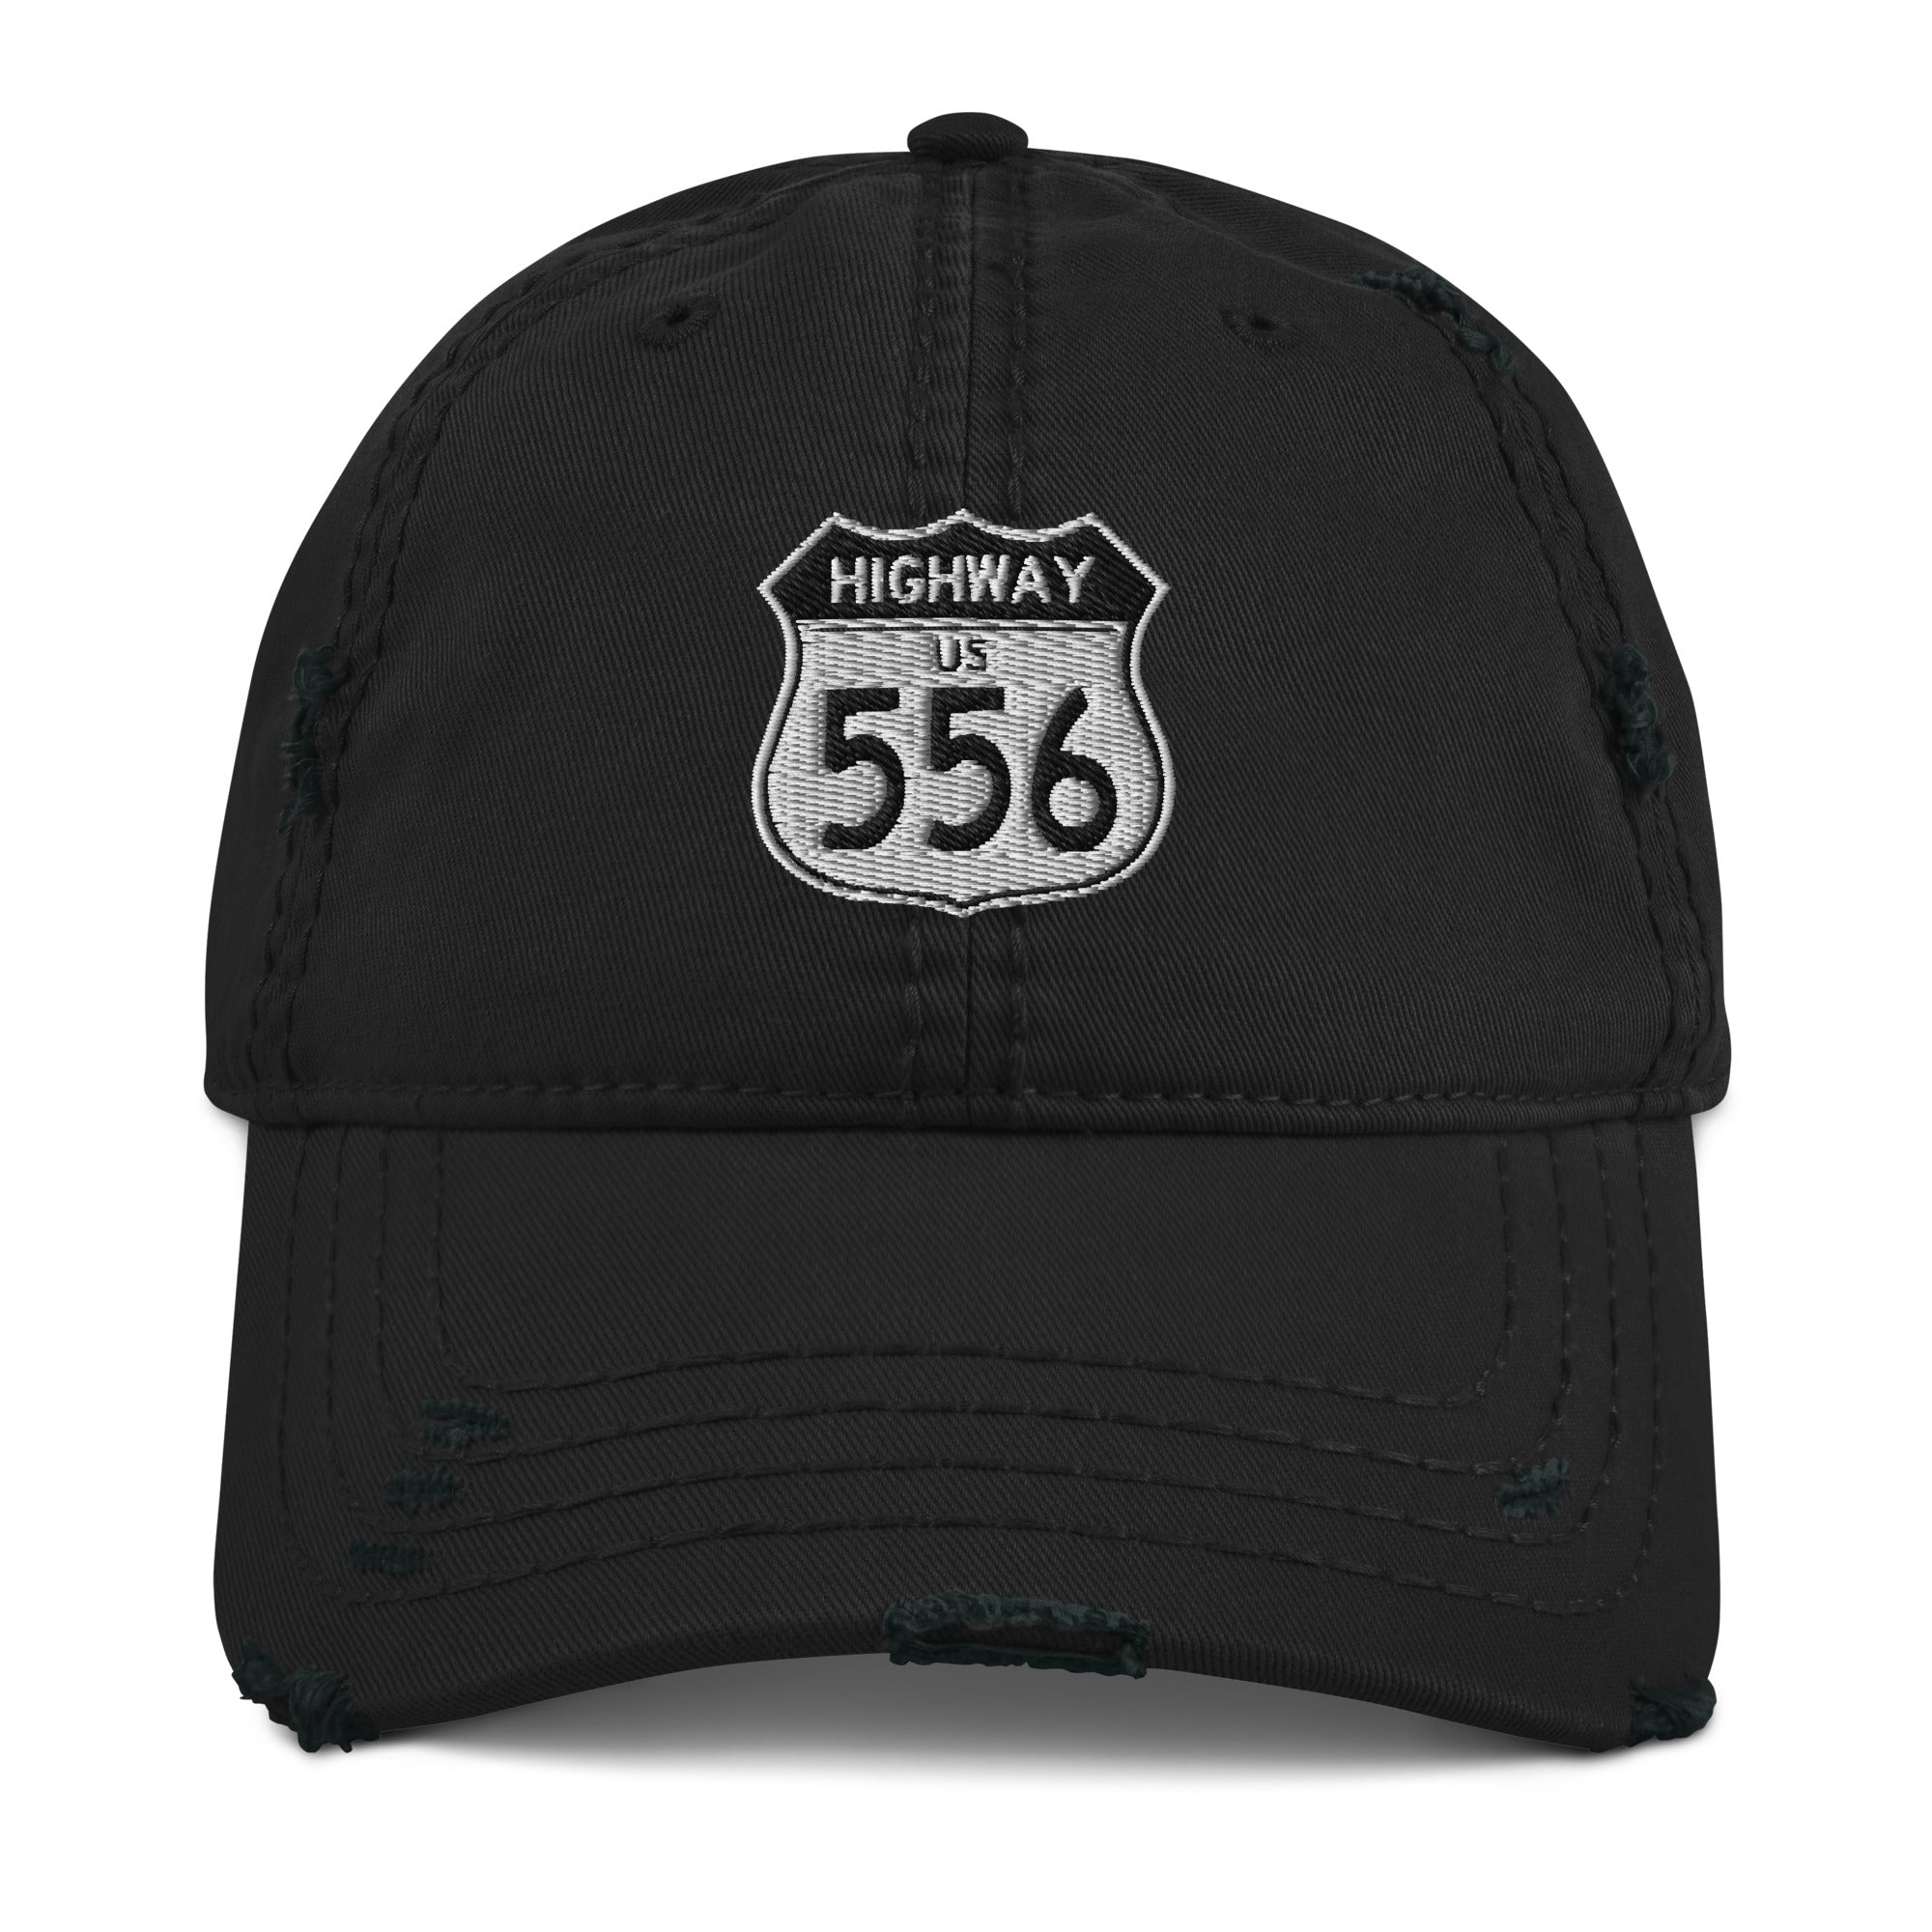 Highway 556 Distressed Dad Hat